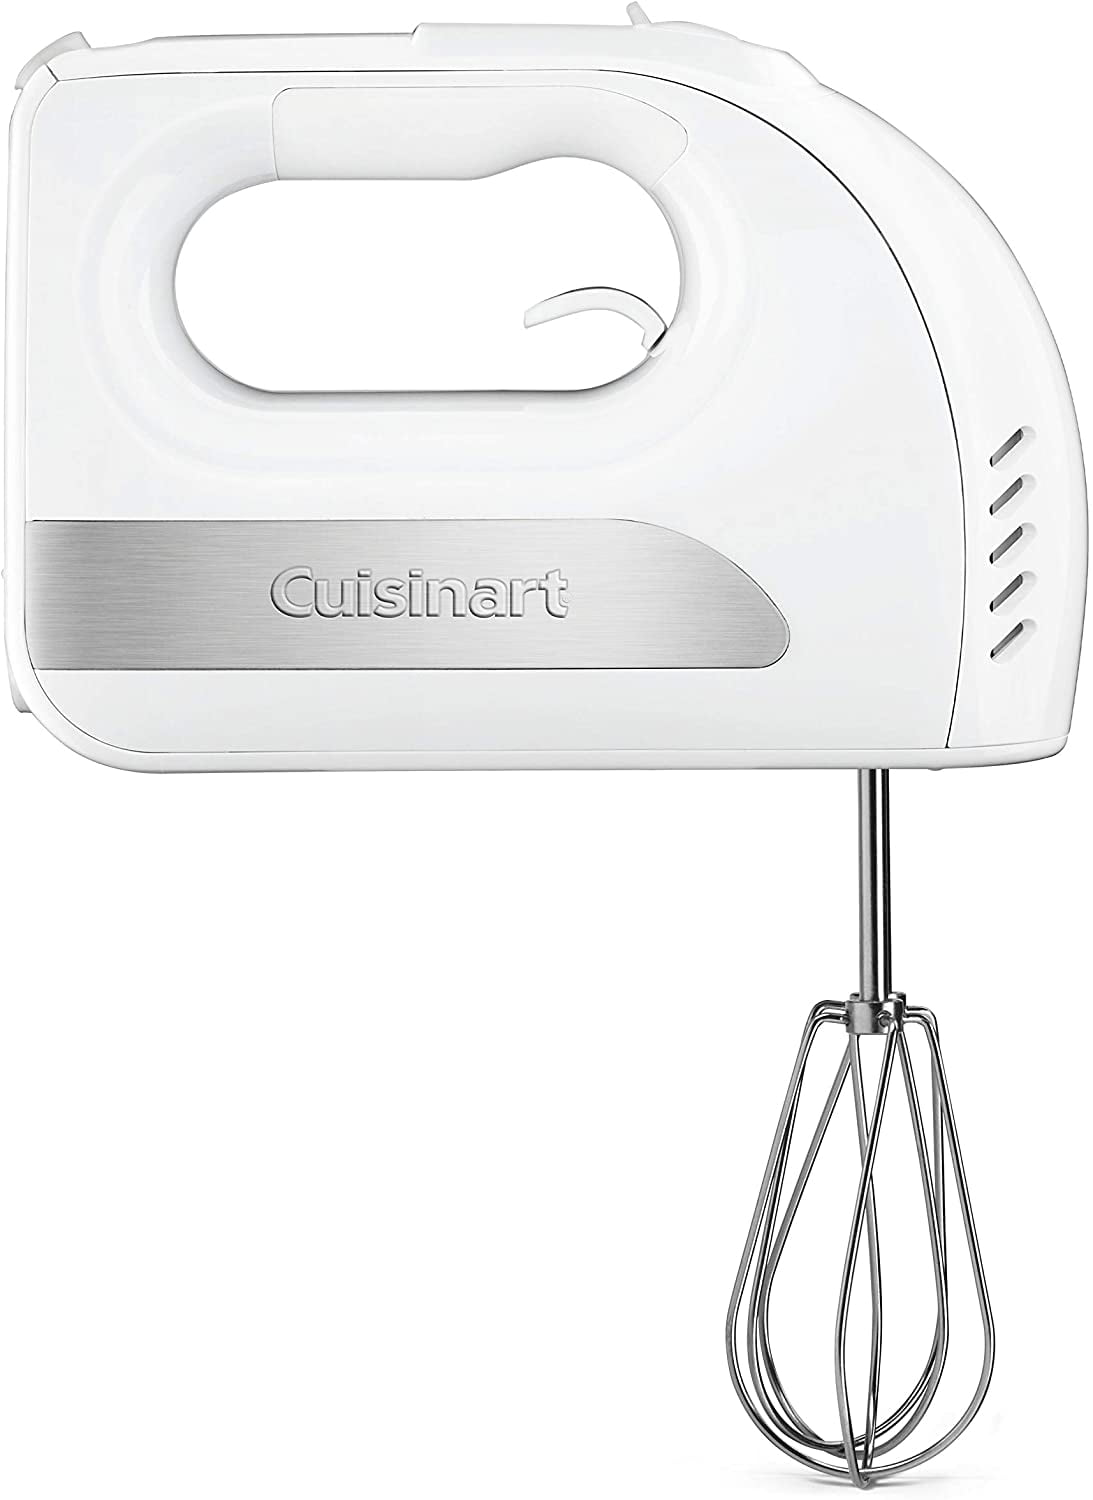 Cuisinart HM-3 Power Advantage 3-Speed Hand Mixer, White